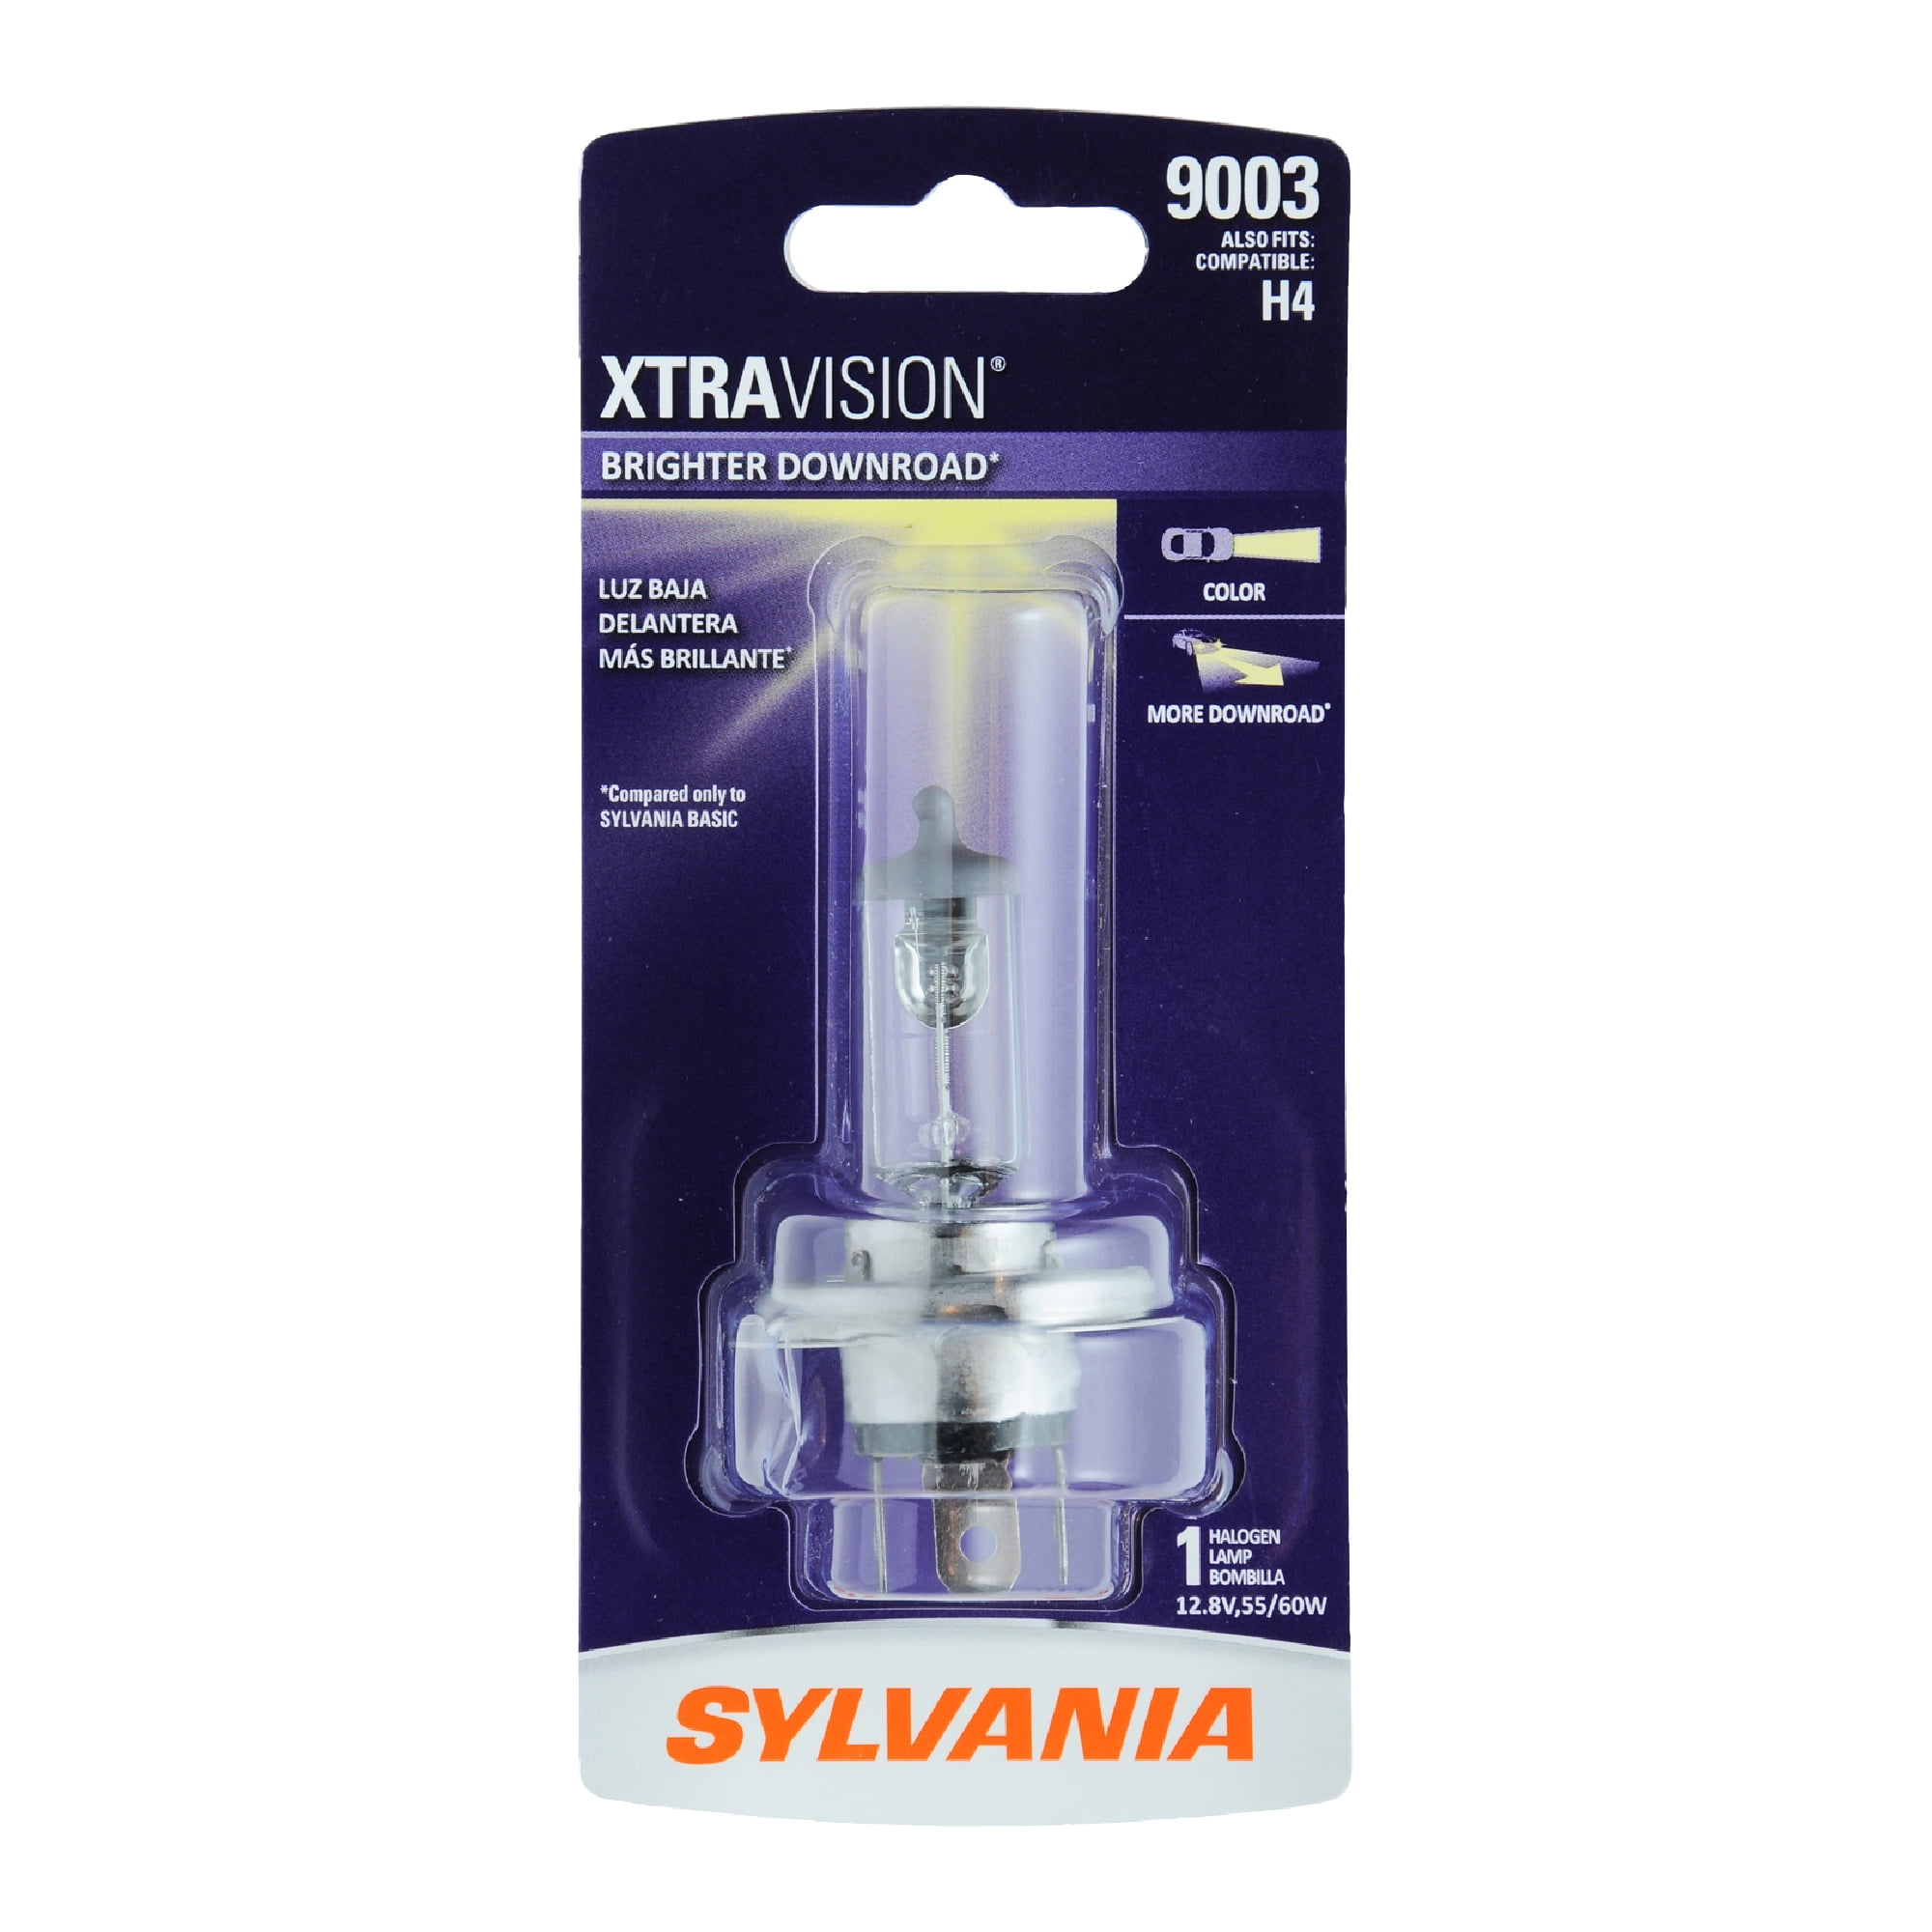 Oswald onderhoud sectie Sylvania 9003 XtraVision Halogen Headlight Bulb, Pack of 1. - Walmart.com